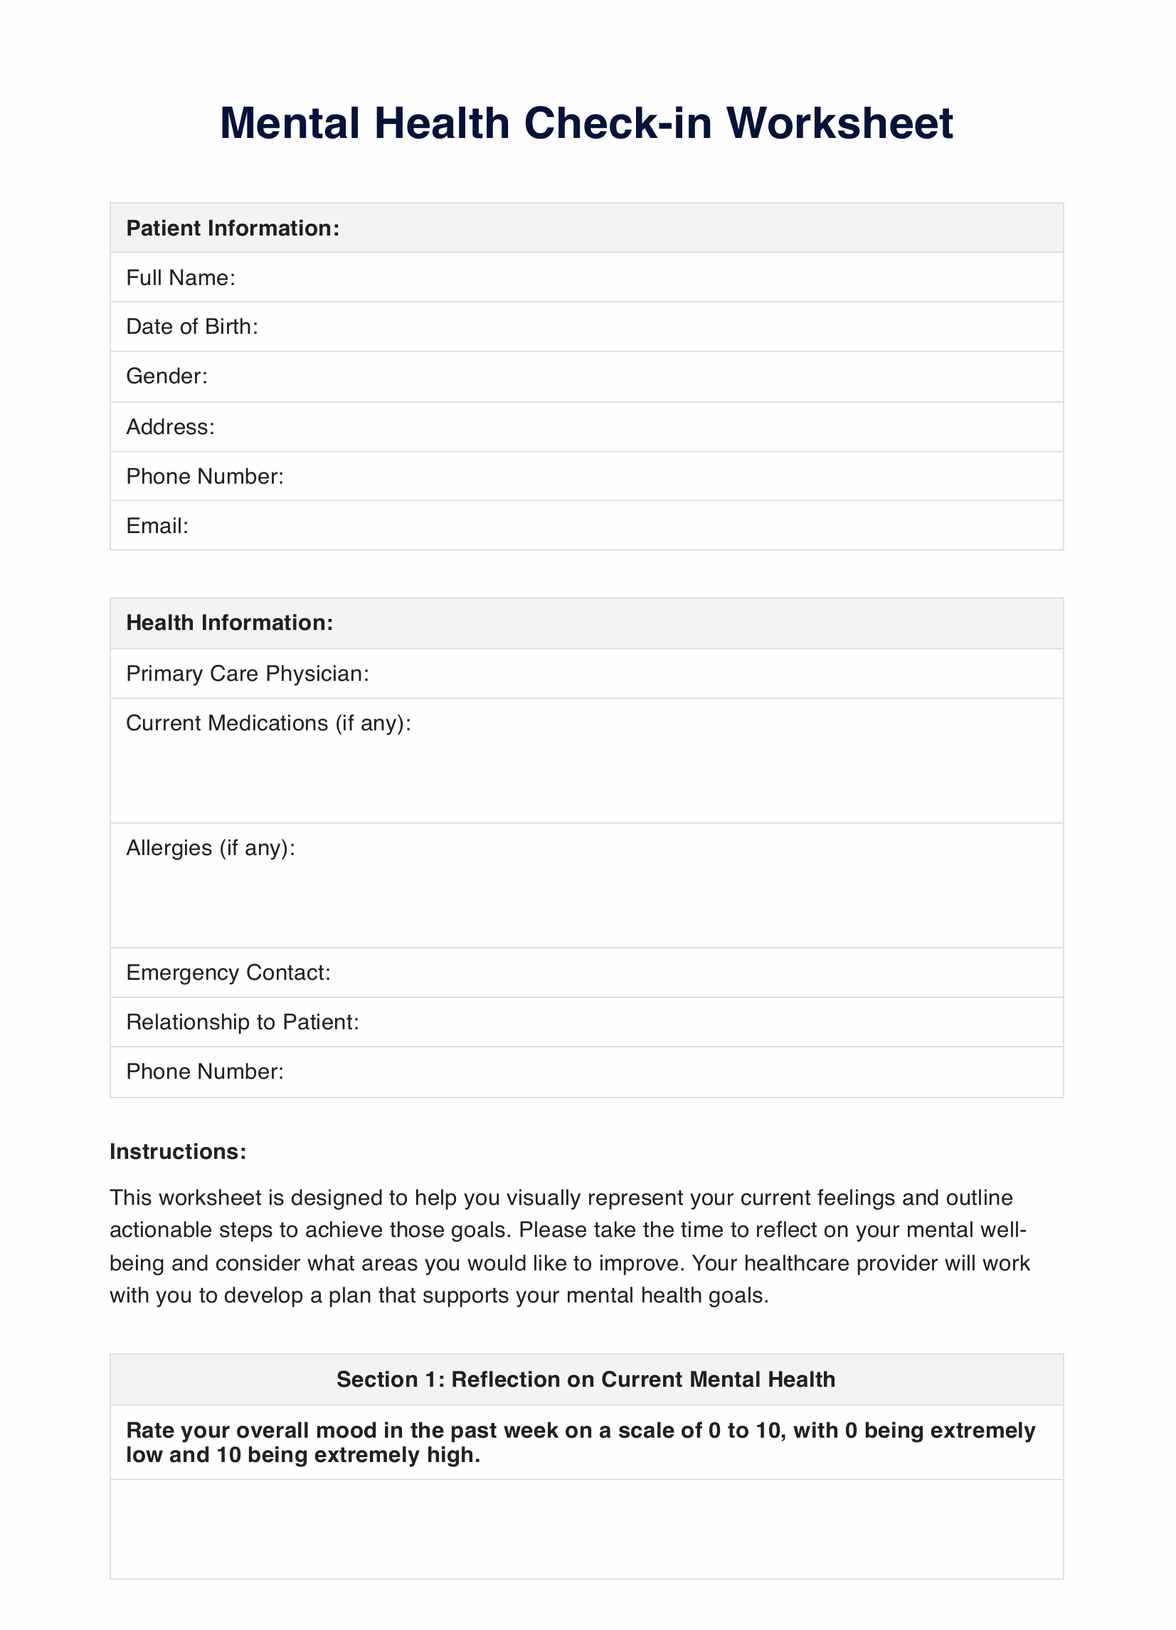 Mental Health Check-in Worksheet PDF Example